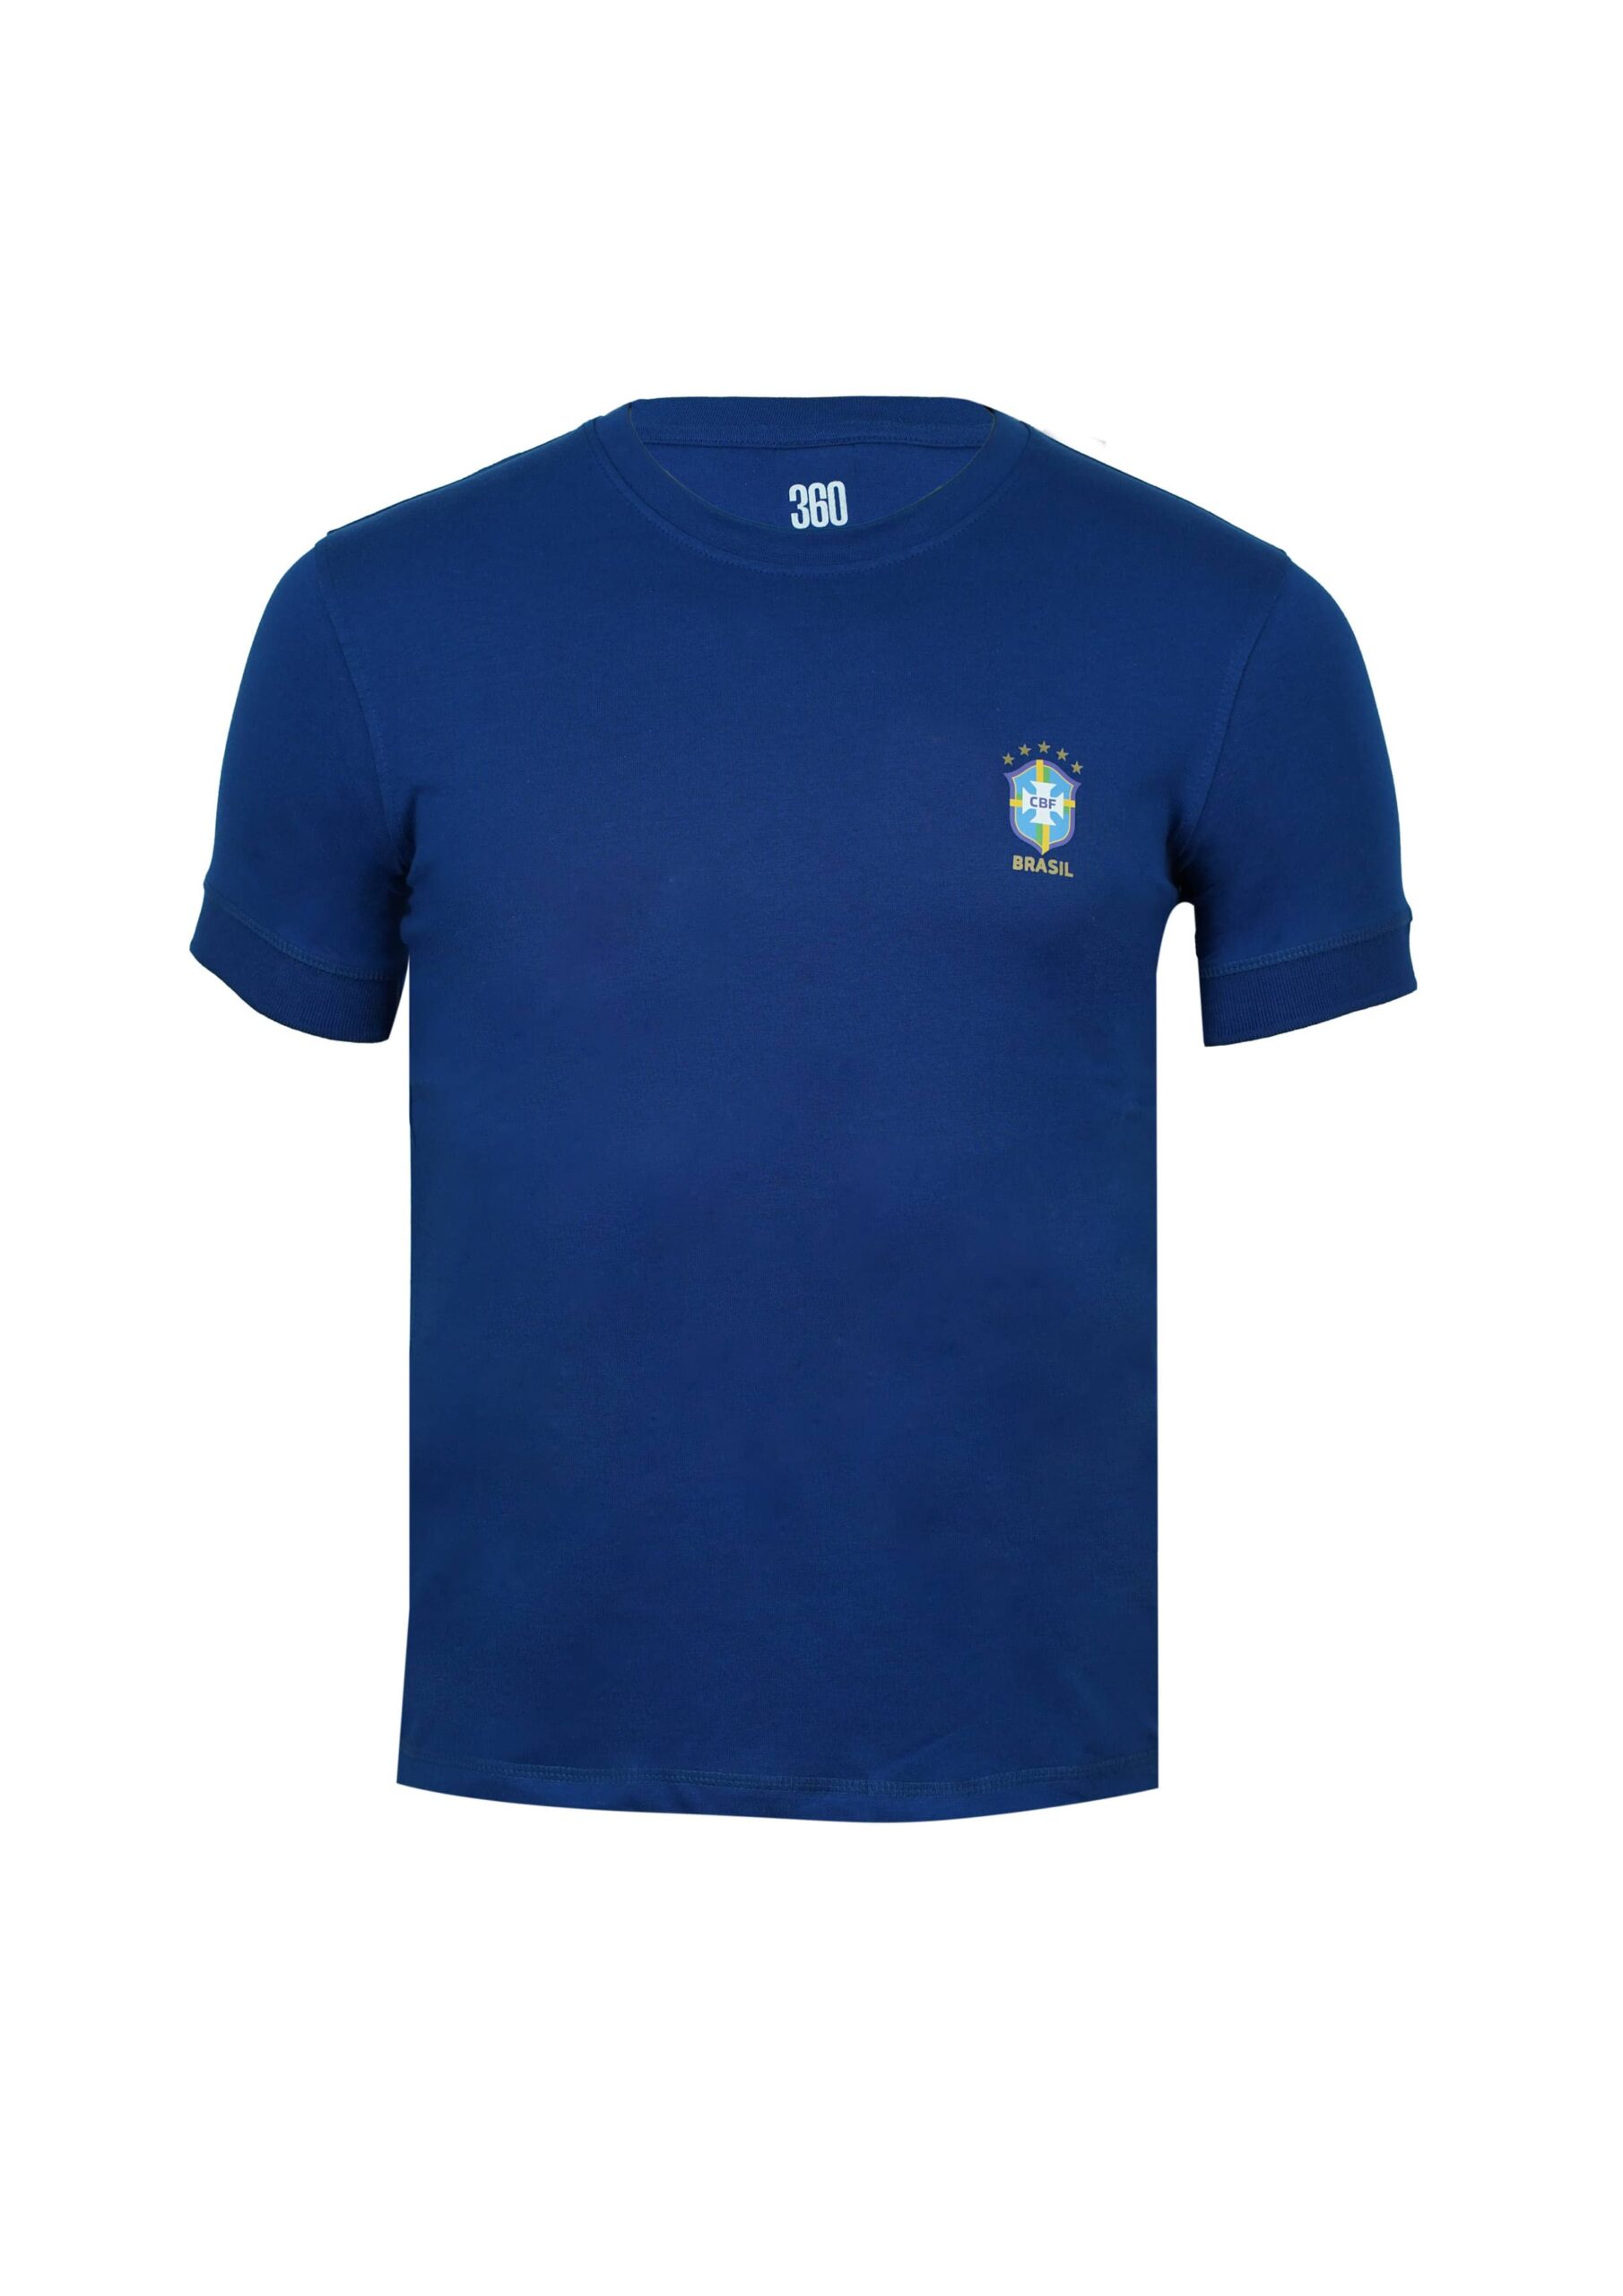 Men’s T-Shirt - Brazil - Artisan Outfitters Ltd